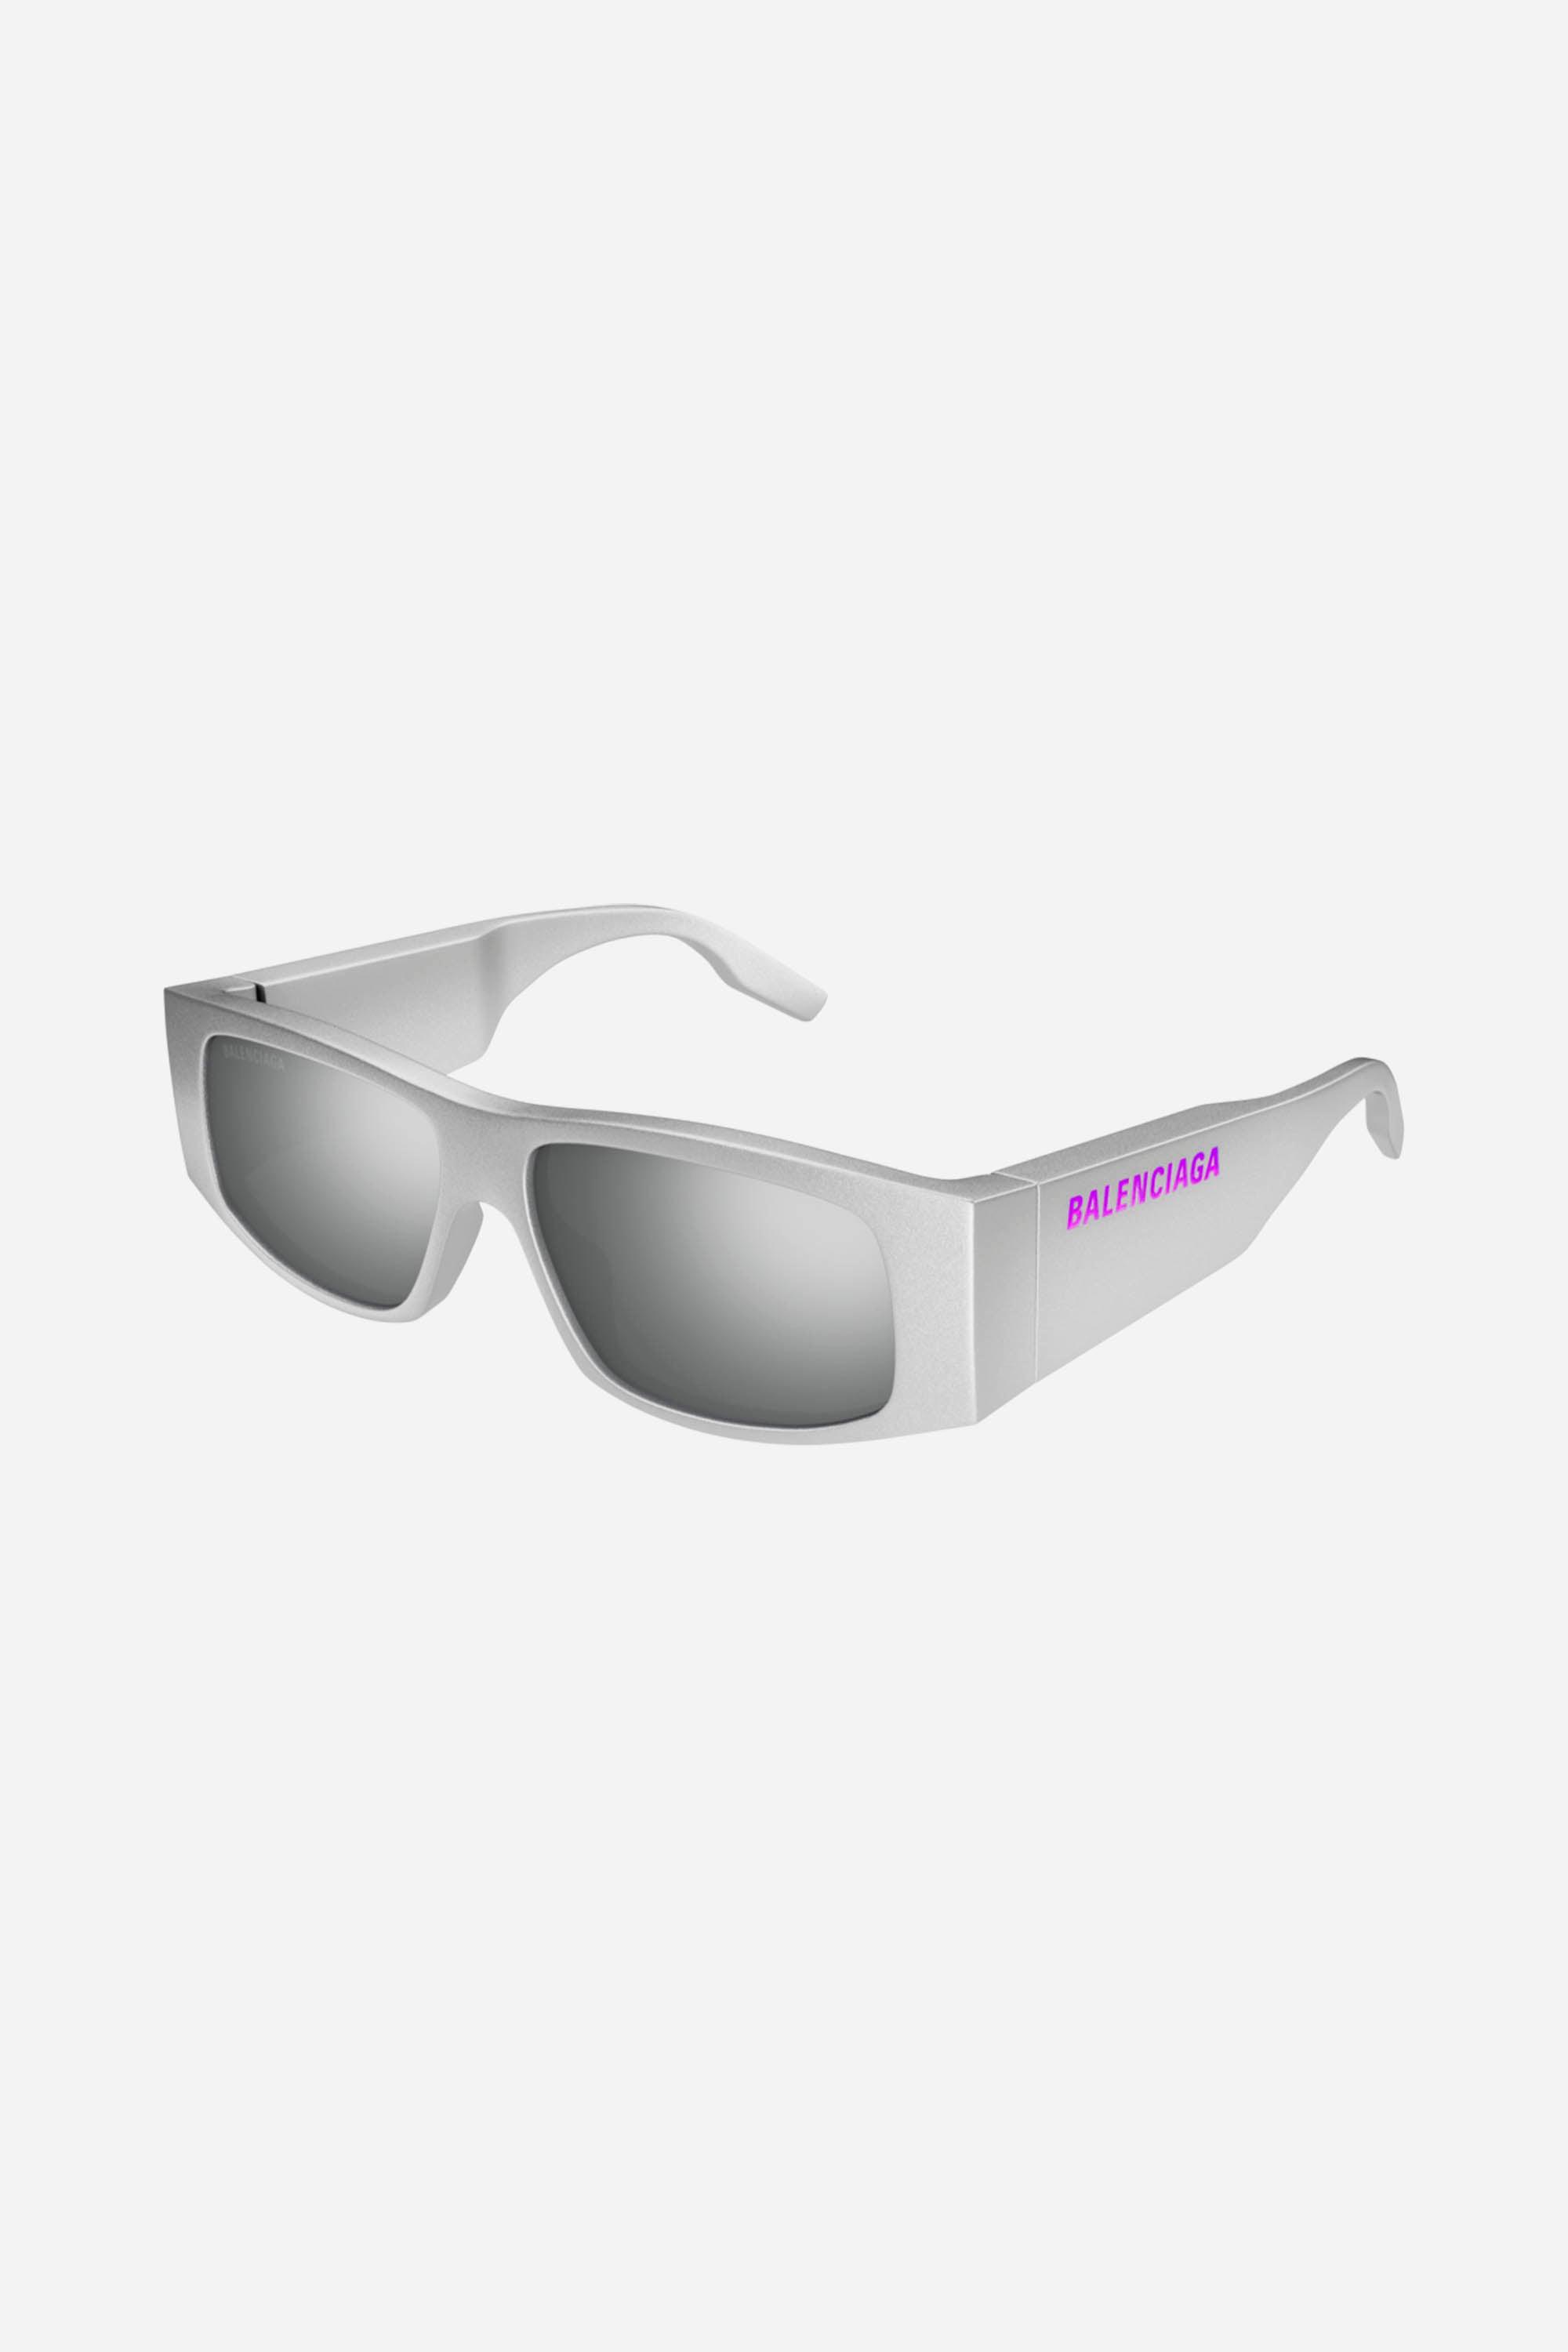 Balenciaga Led Frame Silver Sunglasses in Metallic | Lyst